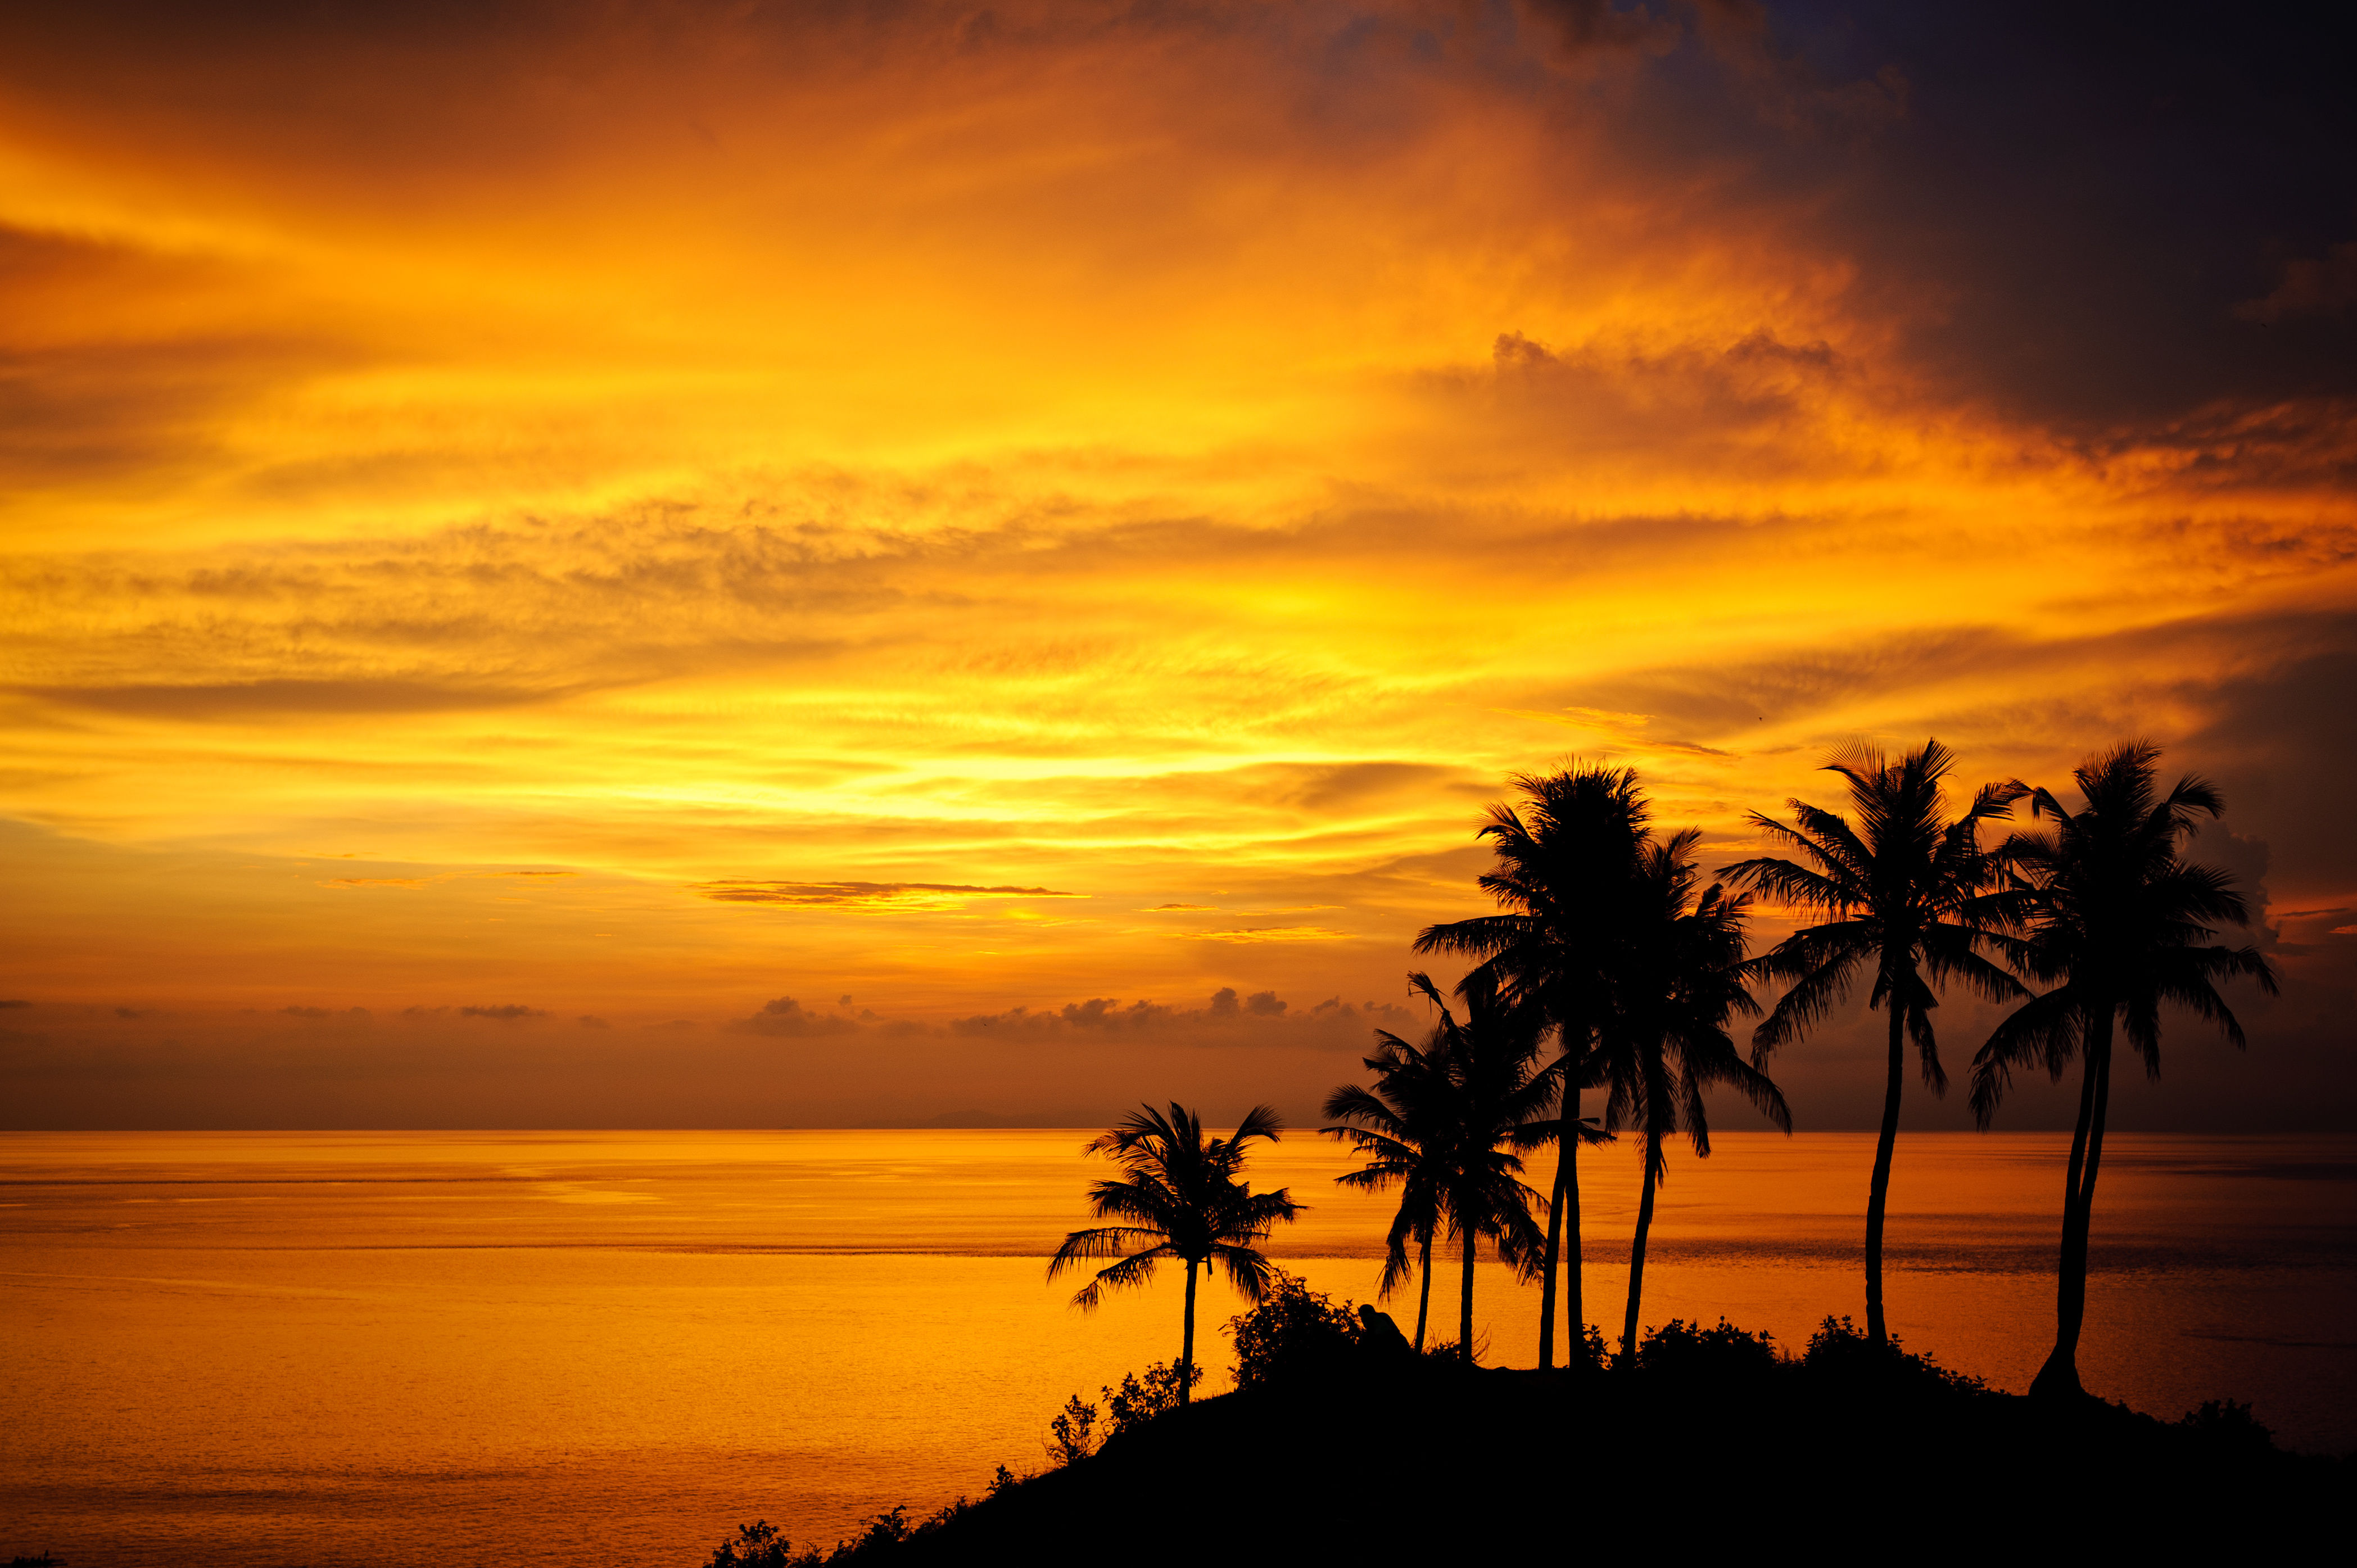 Beautiful golden sunset over palm tree lined bay at Seminyak, Bali.